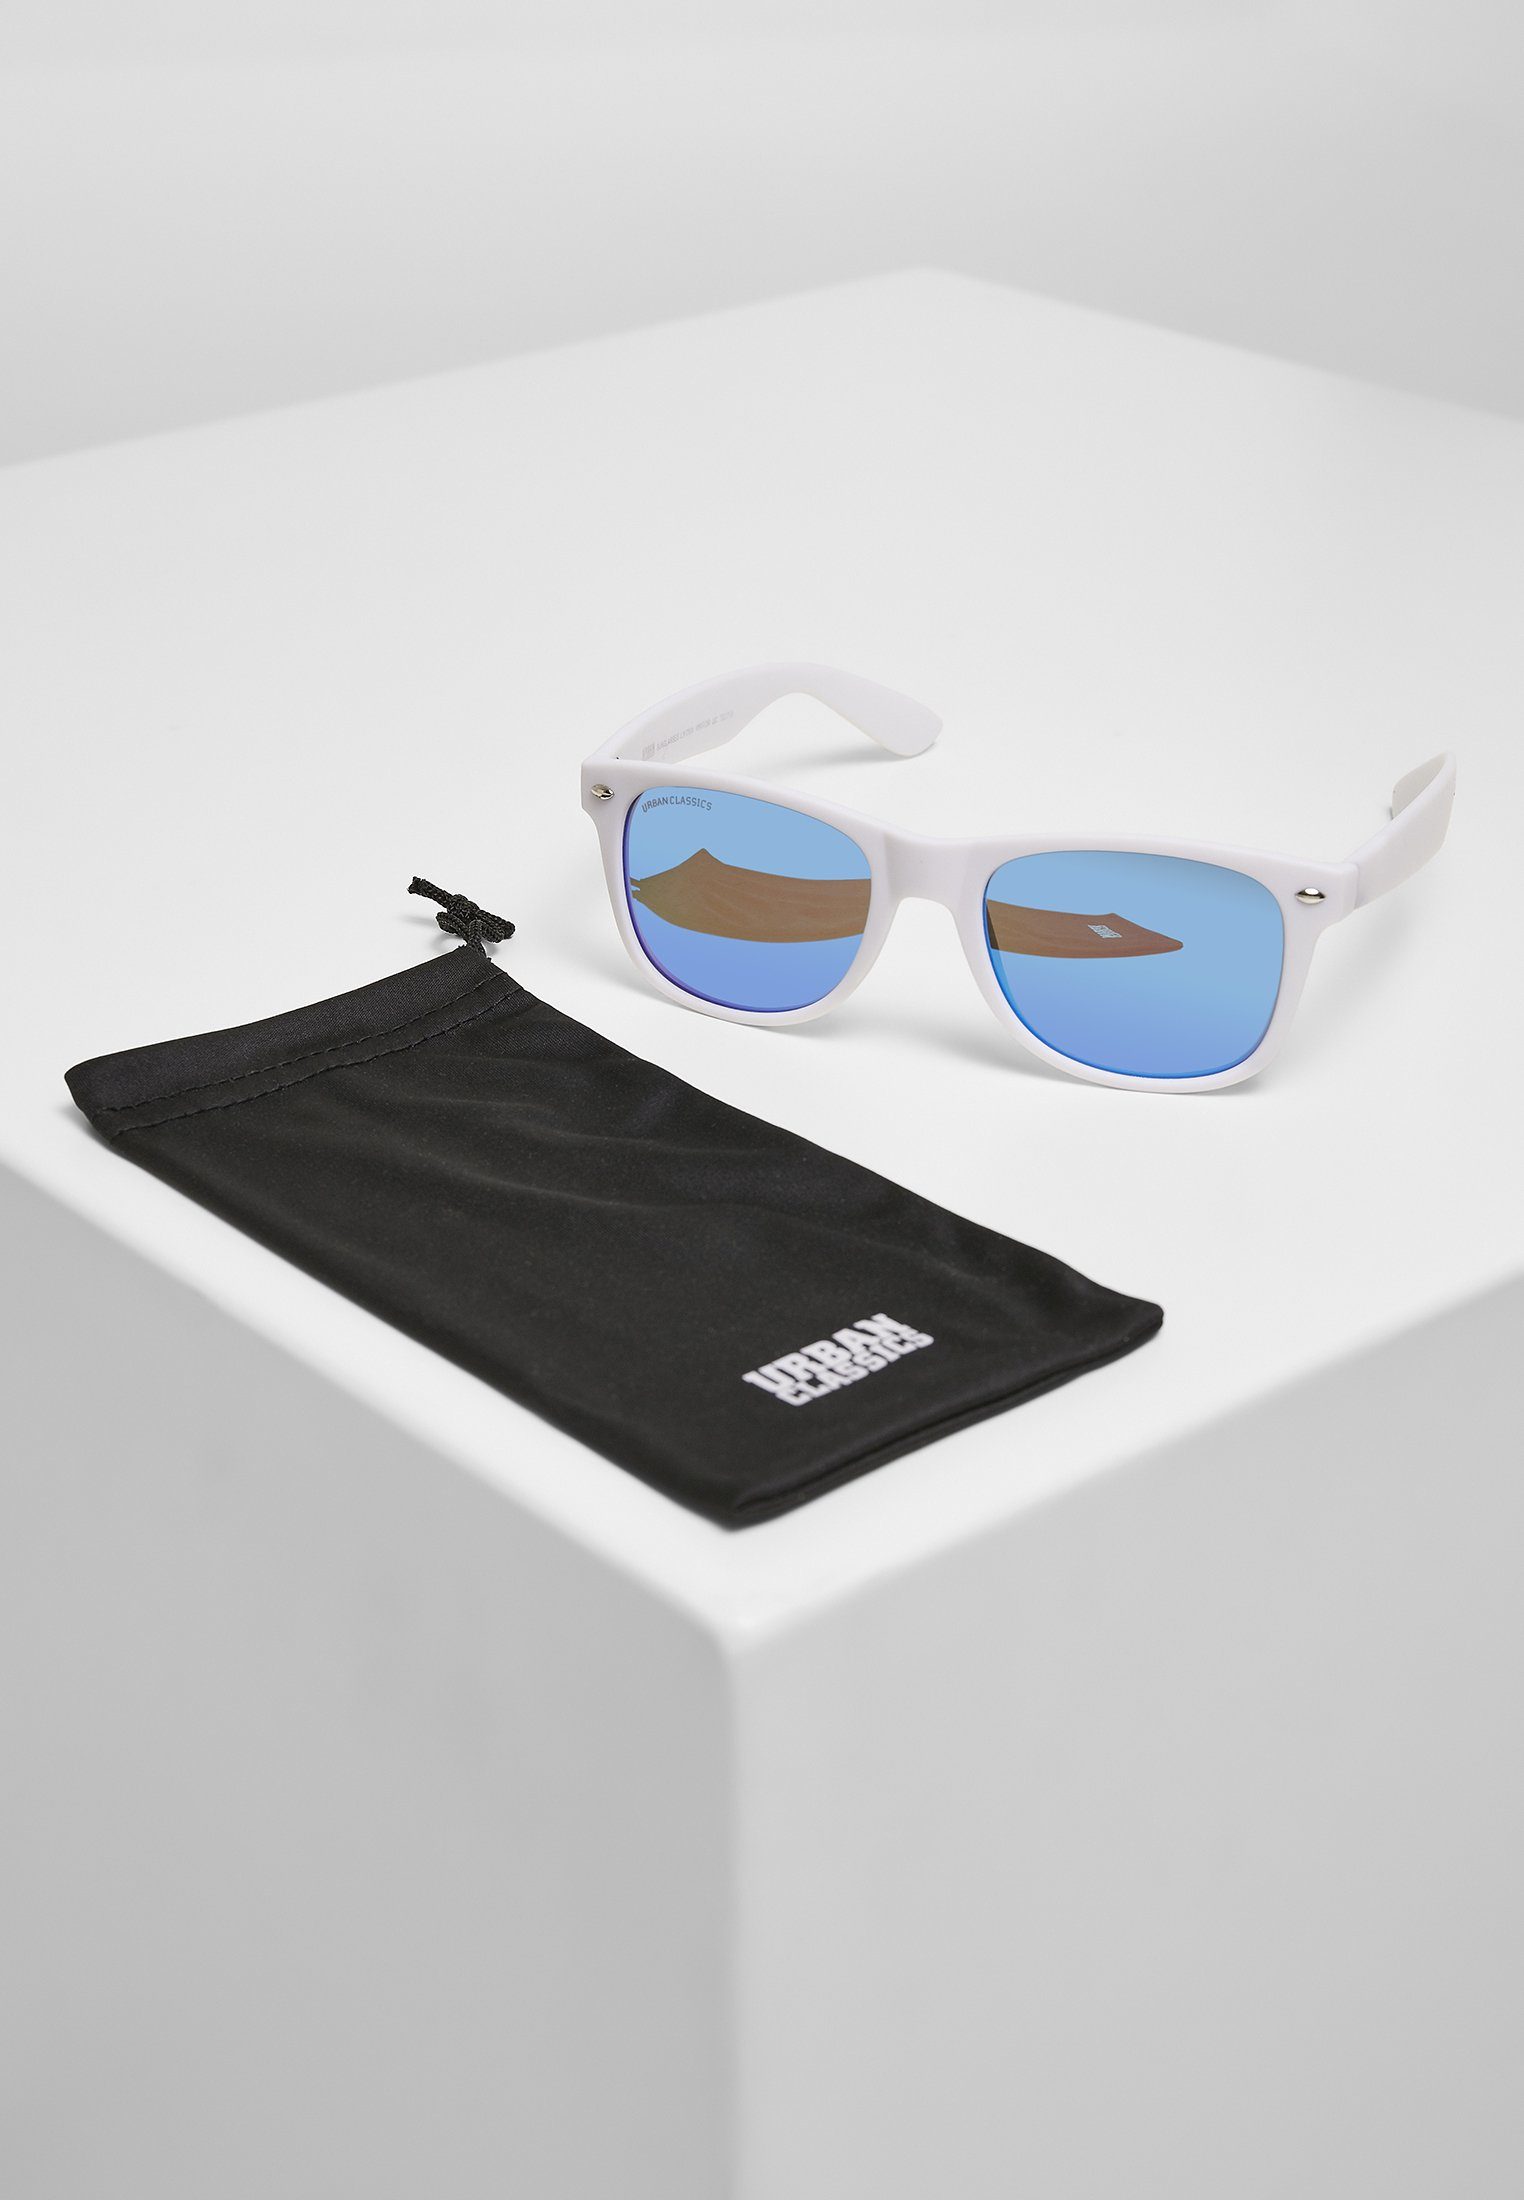 URBAN CLASSICS Sonnenbrille Accessoires Likoma Mirror white/blue Sunglasses UC